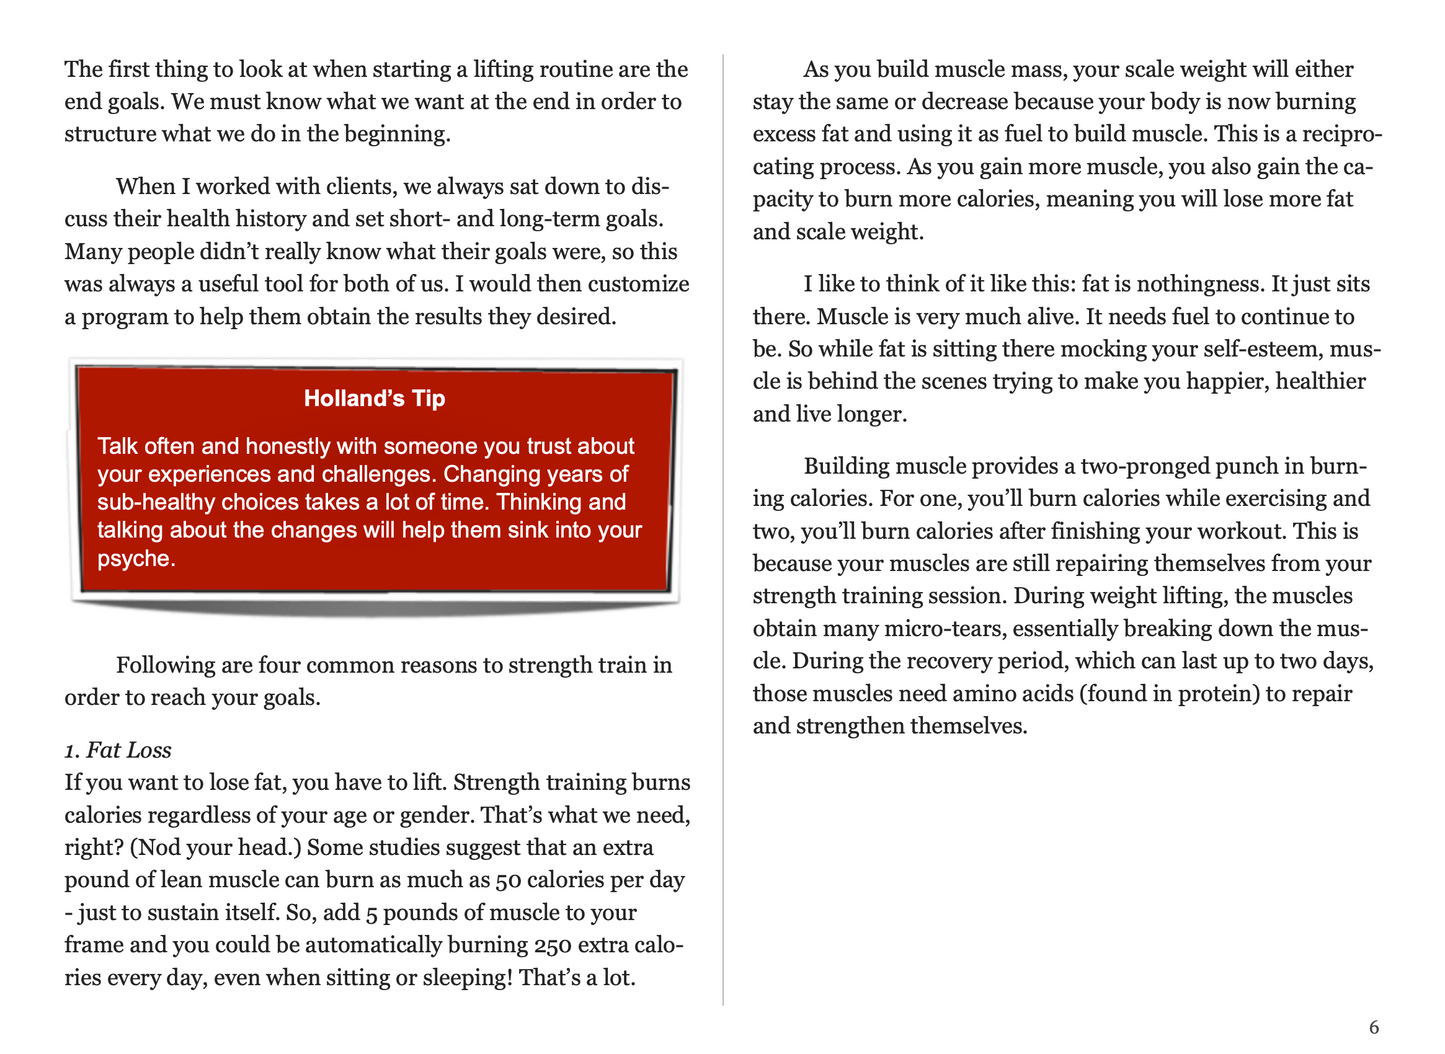 The Fat Trainer eBook PDF